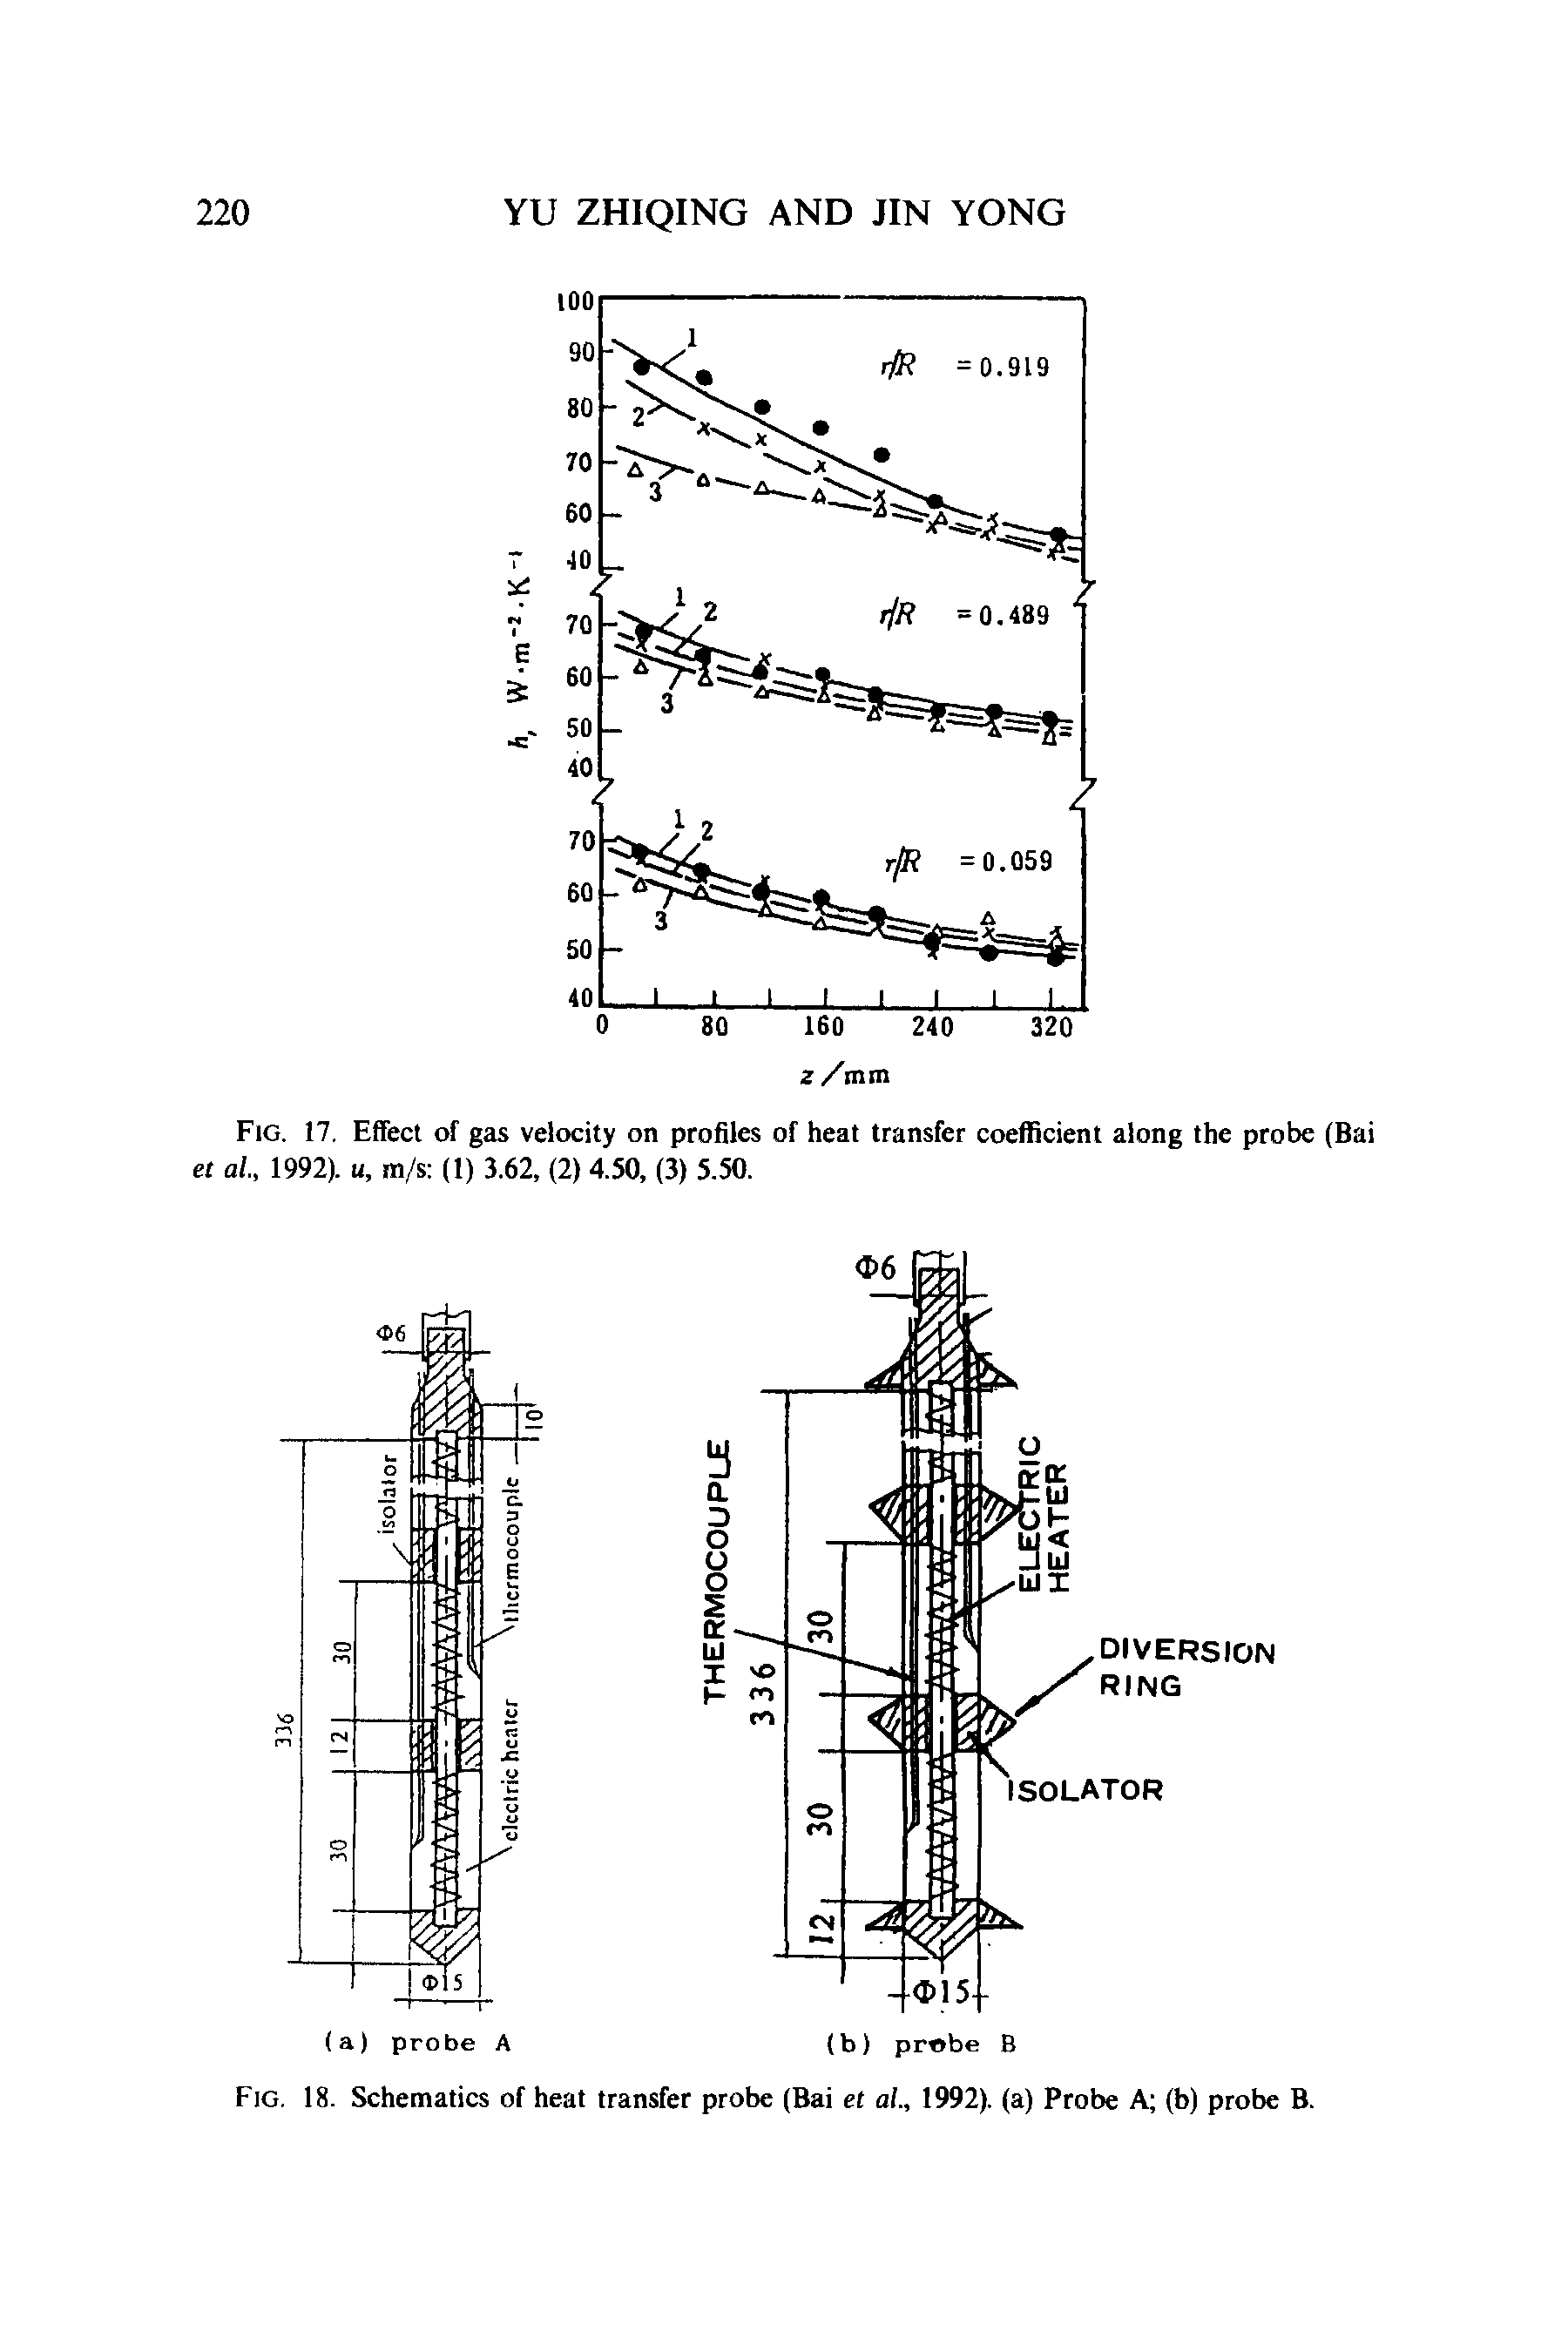 Fig. 18. Schematics of heat transfer probe (Bai et al., 1992). (a) Probe A (b) probe B.